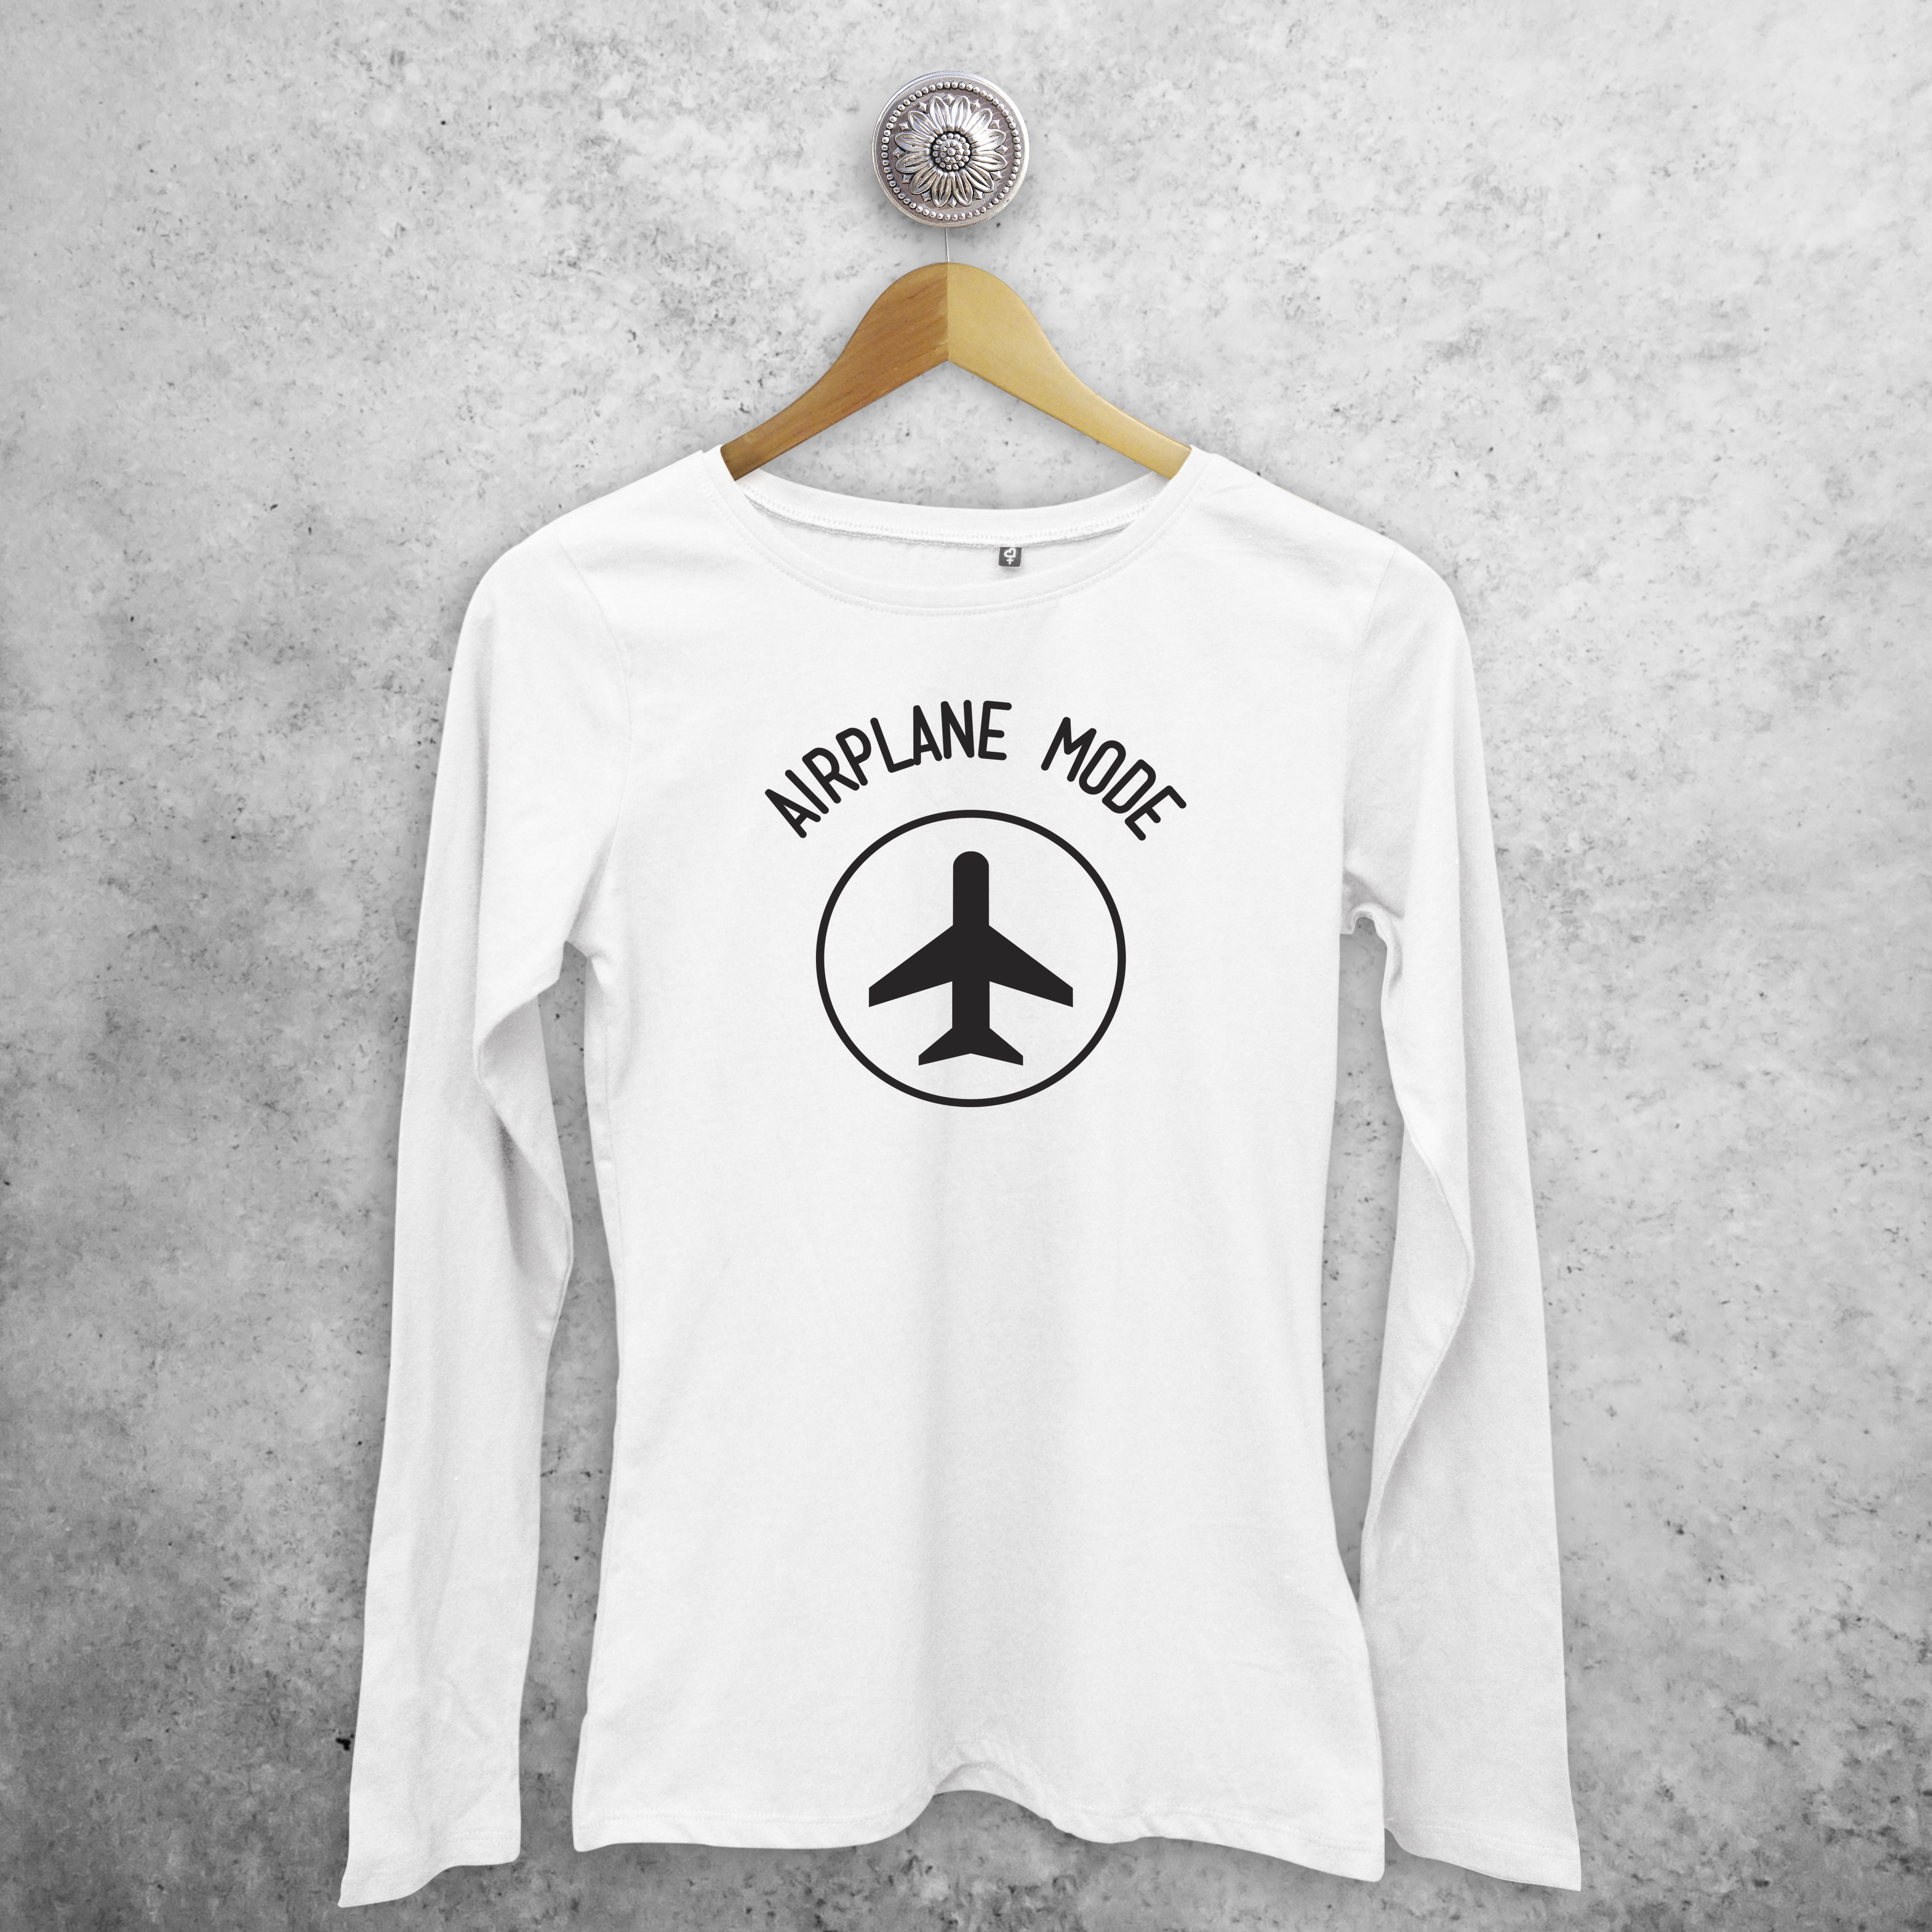 'Airplane mode' adult longsleeve shirt